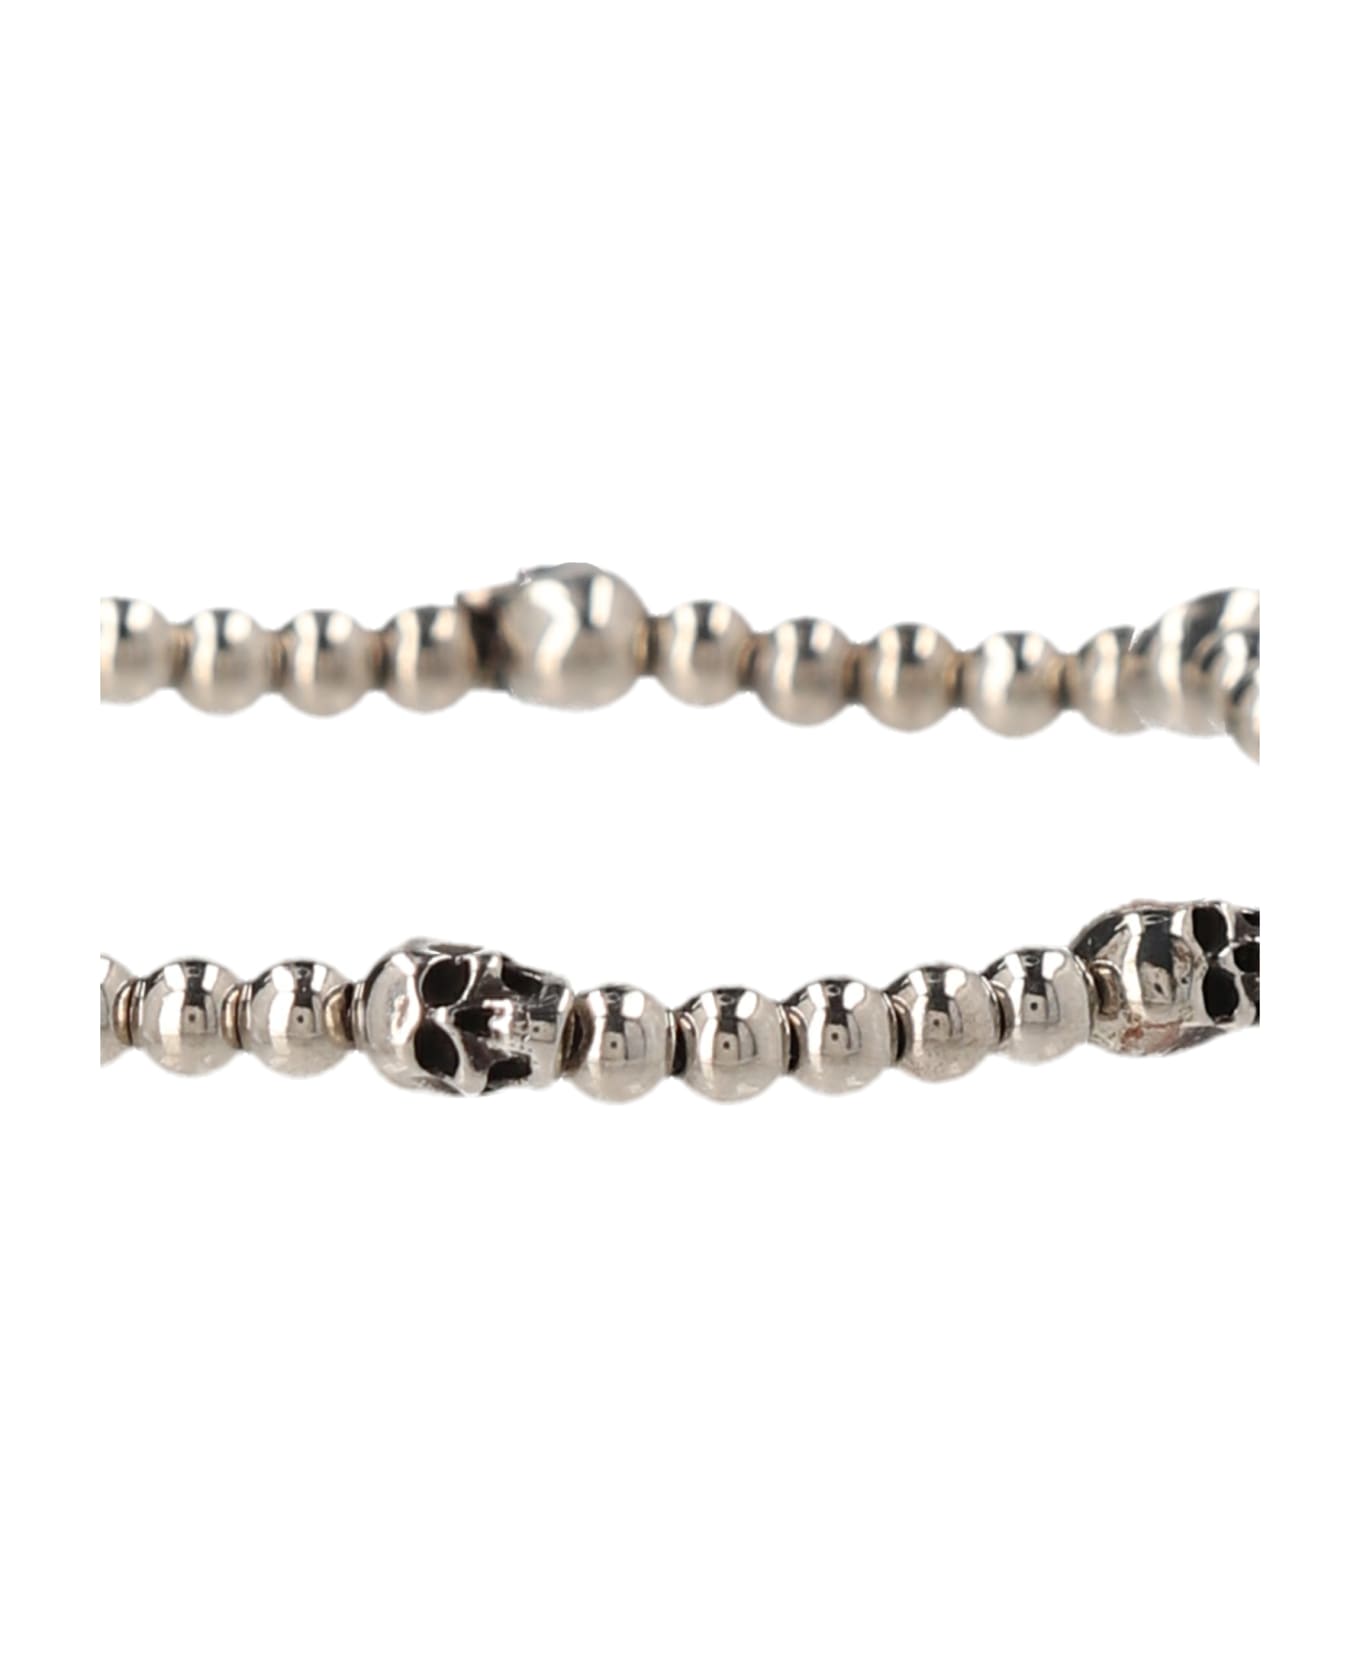 Alexander McQueen Skull Beads Bracelet - Argento ブレスレット